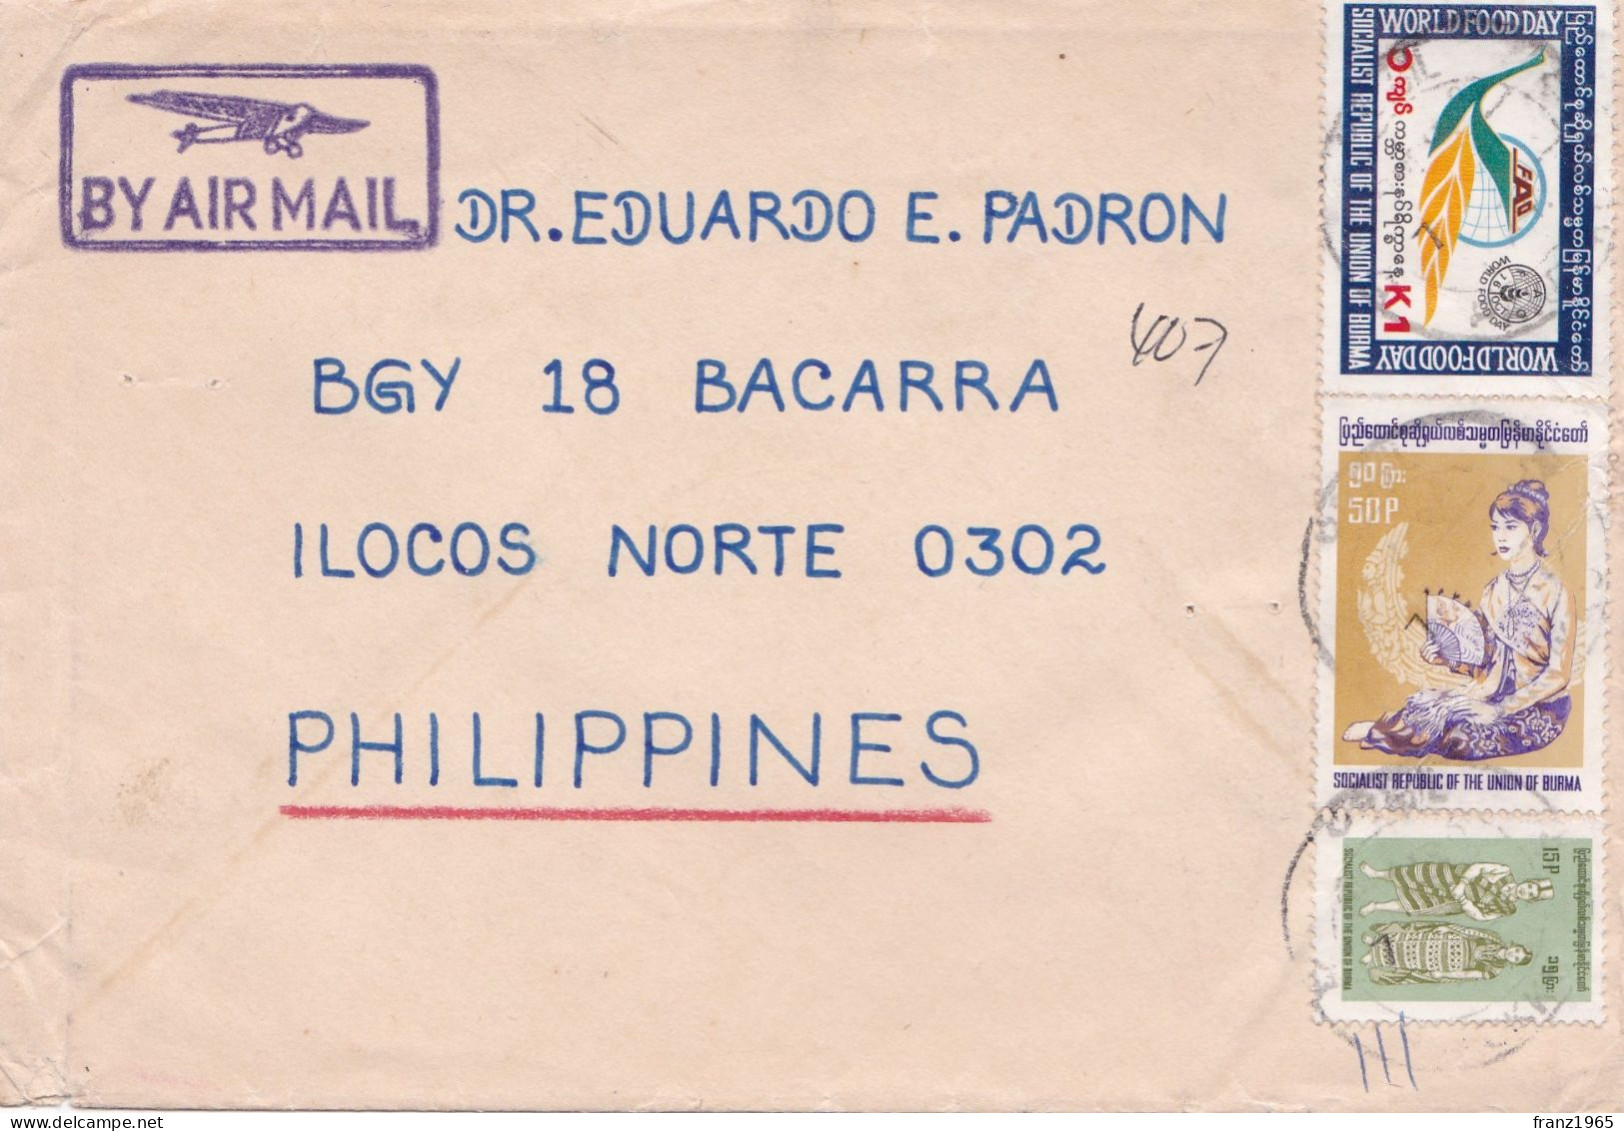 From Burma To Philippines - 1988 - Myanmar (Burma 1948-...)